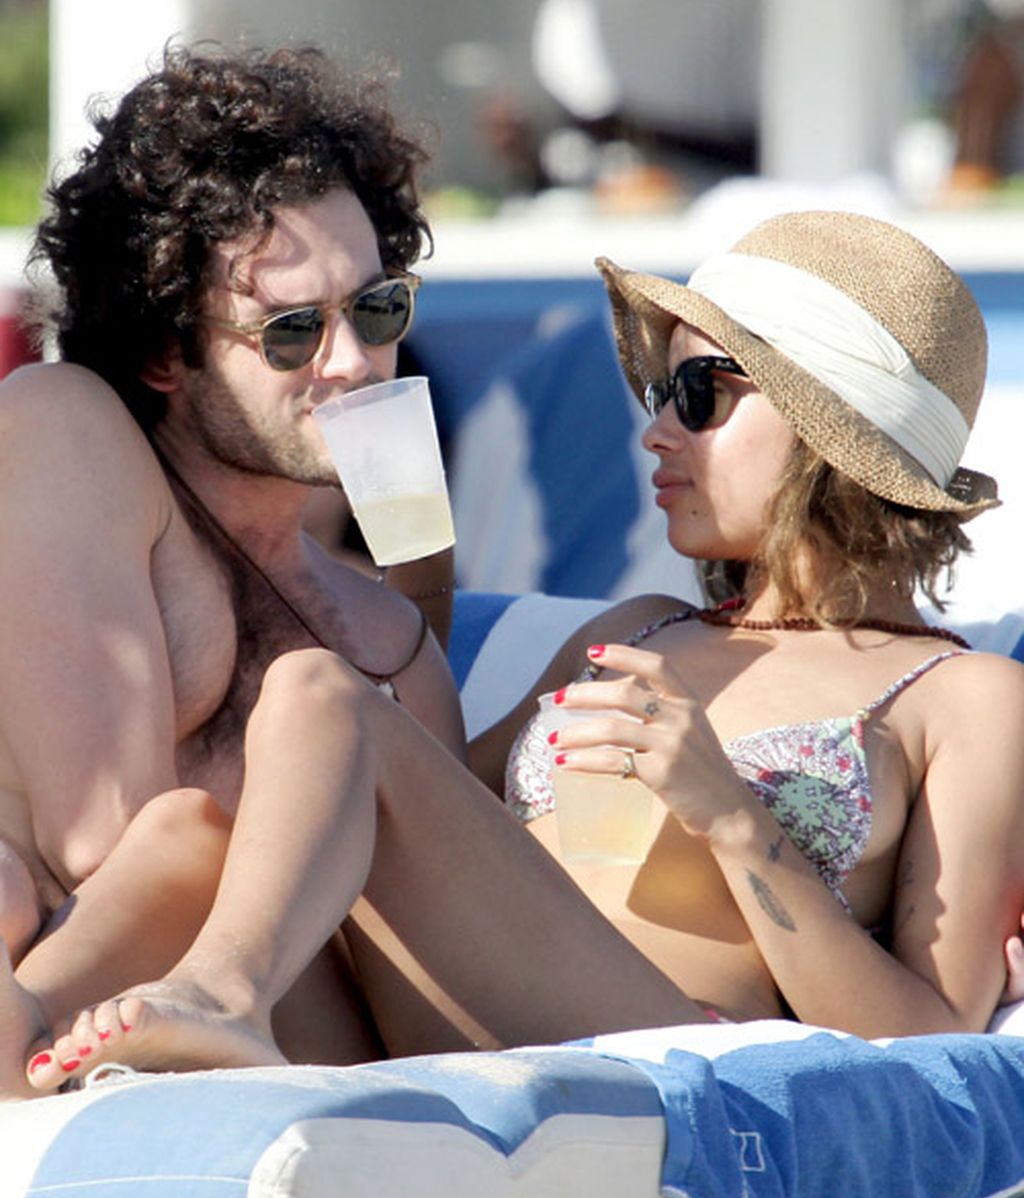 Penn Badgley (Dan en Gossip Girl) con Zoe Kravitz de cócteles y playa